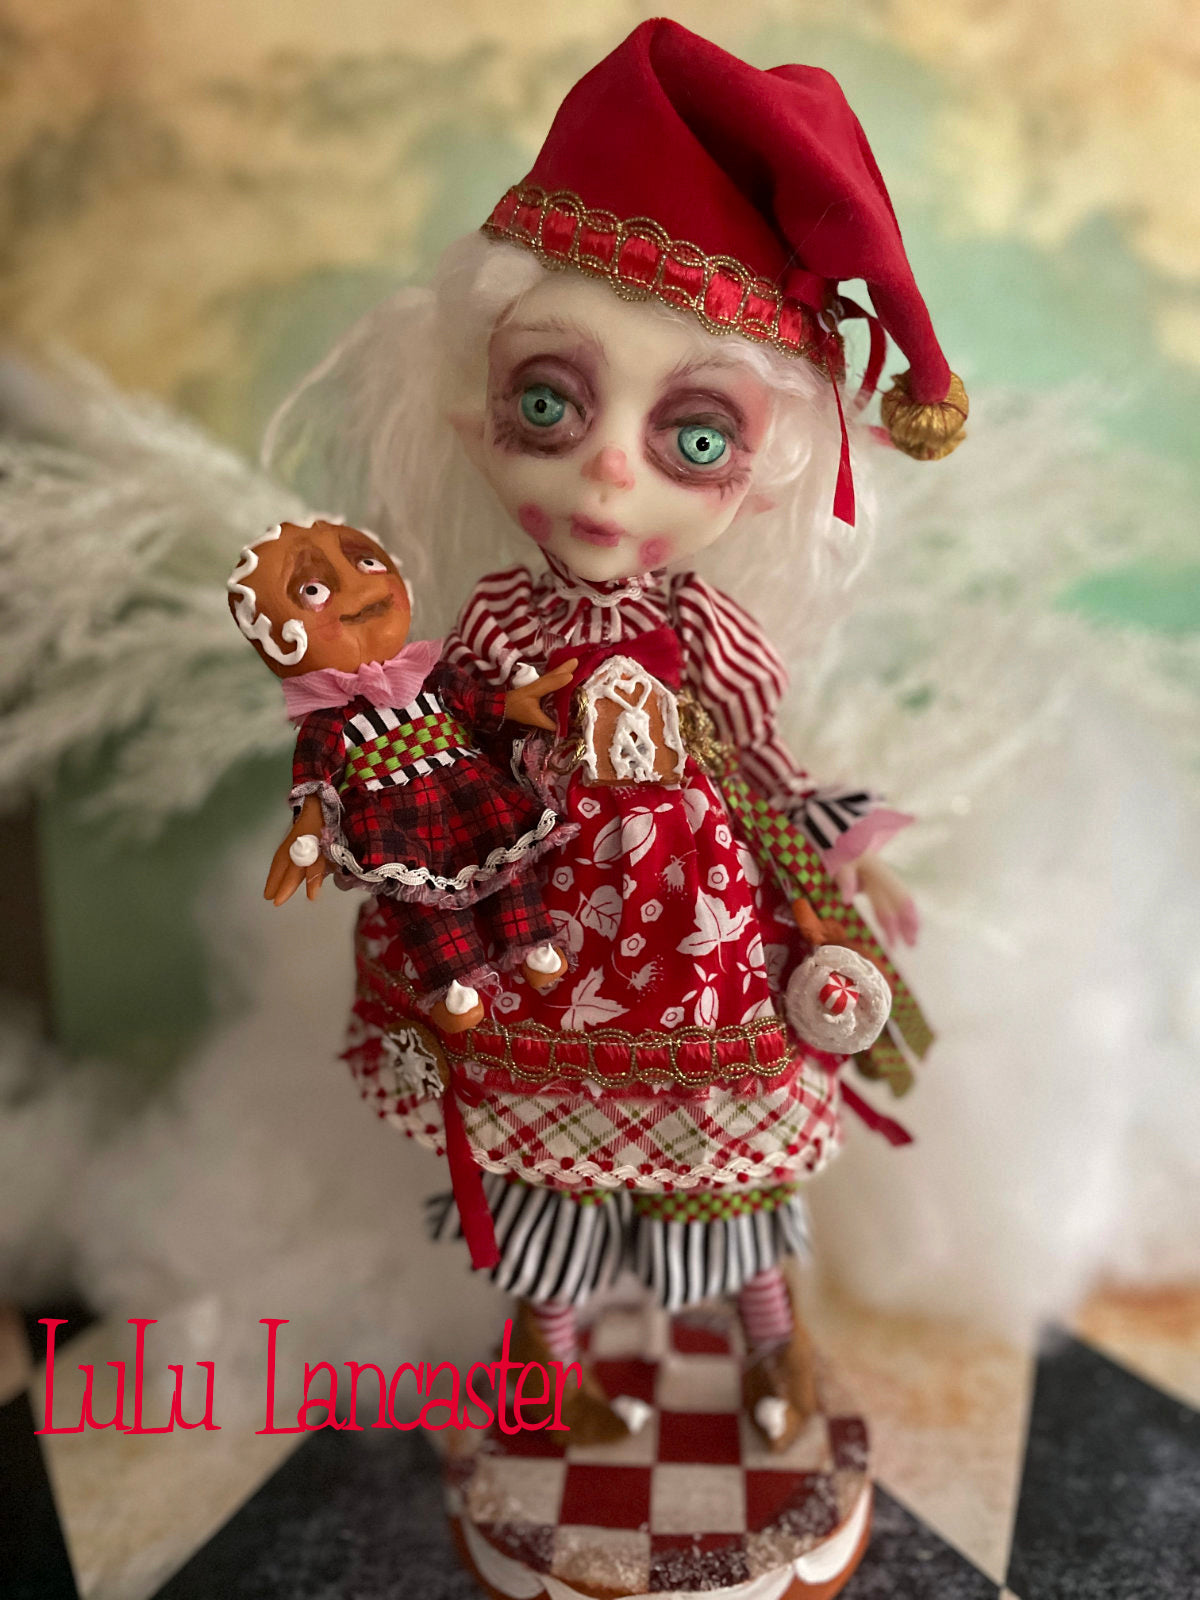 SleepyTime Gingerbread the Christmas Elf LuLu's Holiday Original LuLu Lancaster Art Doll